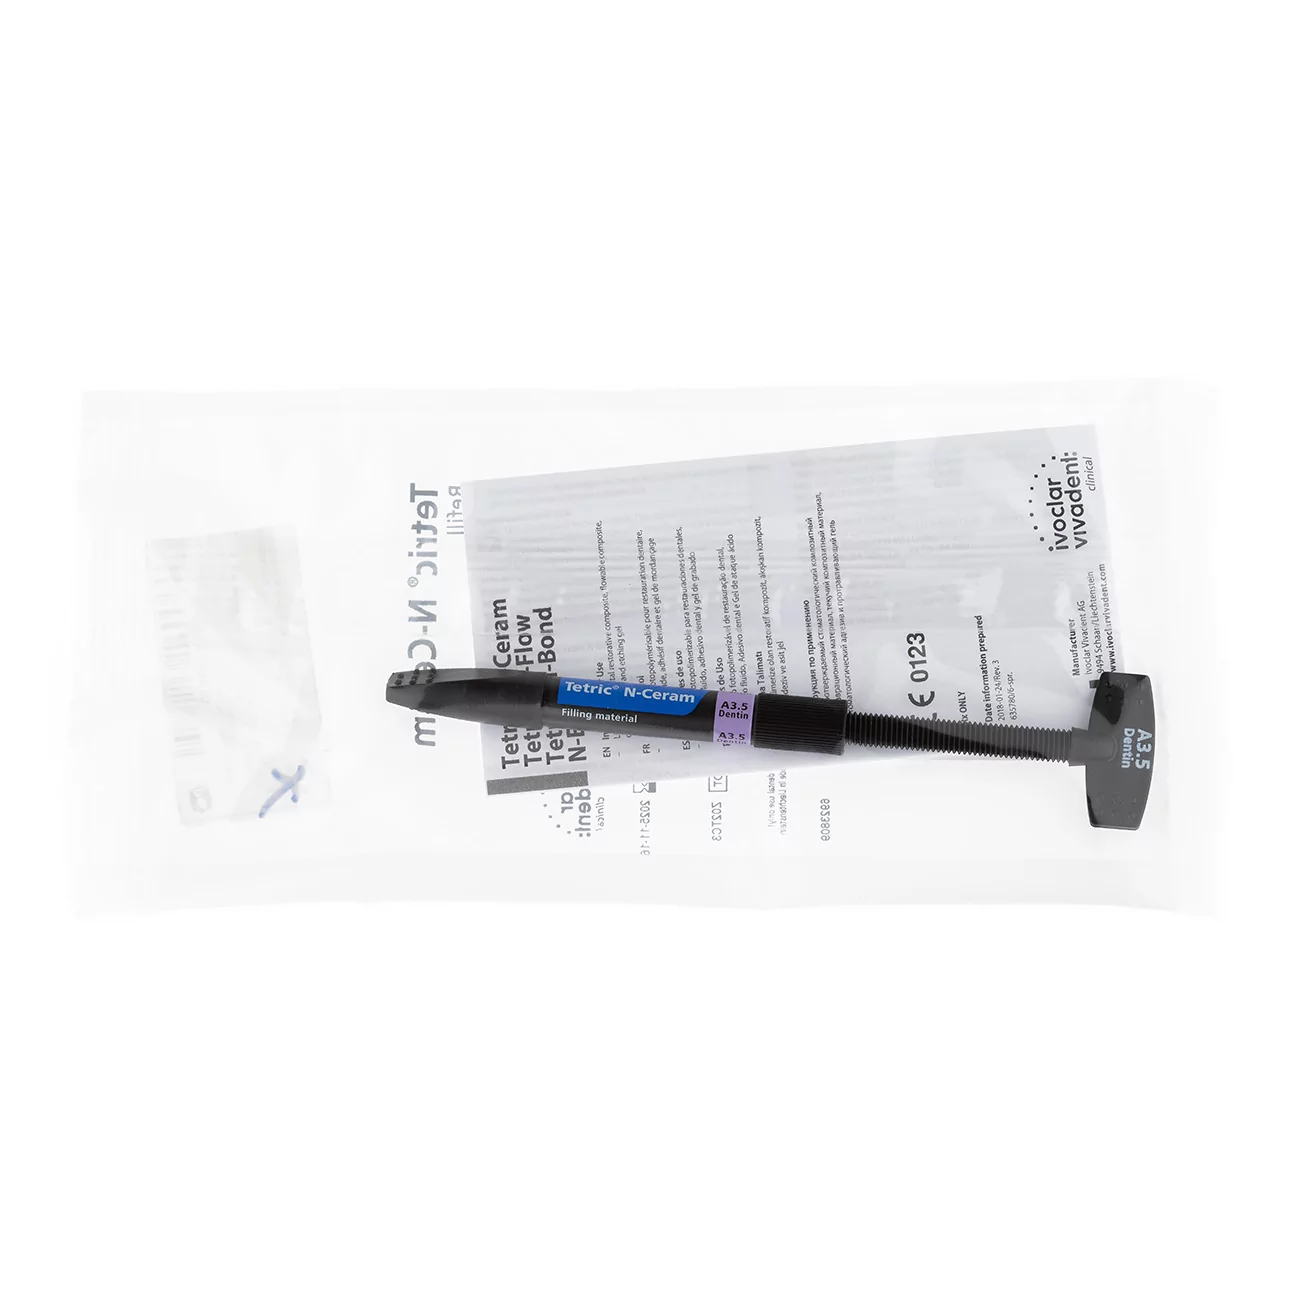 Tetric N-Ceram Refill 1x3.5g A3.5 Dentin Материал стоматологический пломбировочный, 604029AN